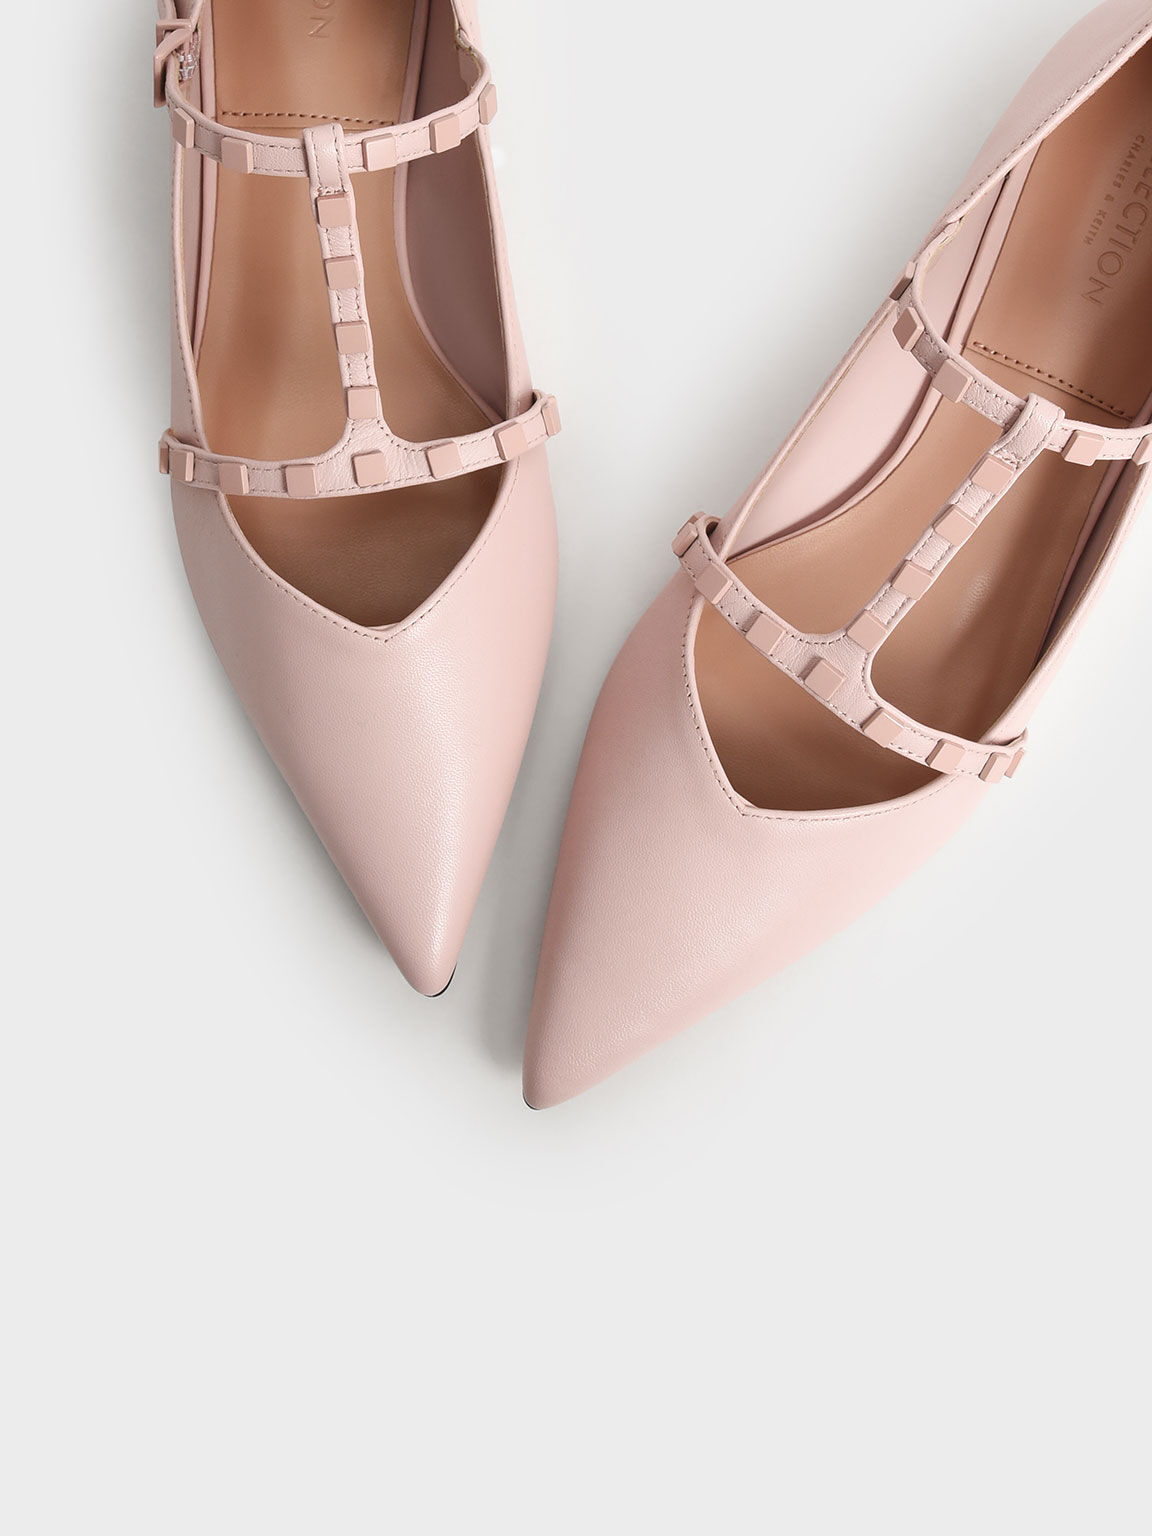 Sepatu Flat Ballerina Strappy  Leather Embellished, Pink, hi-res